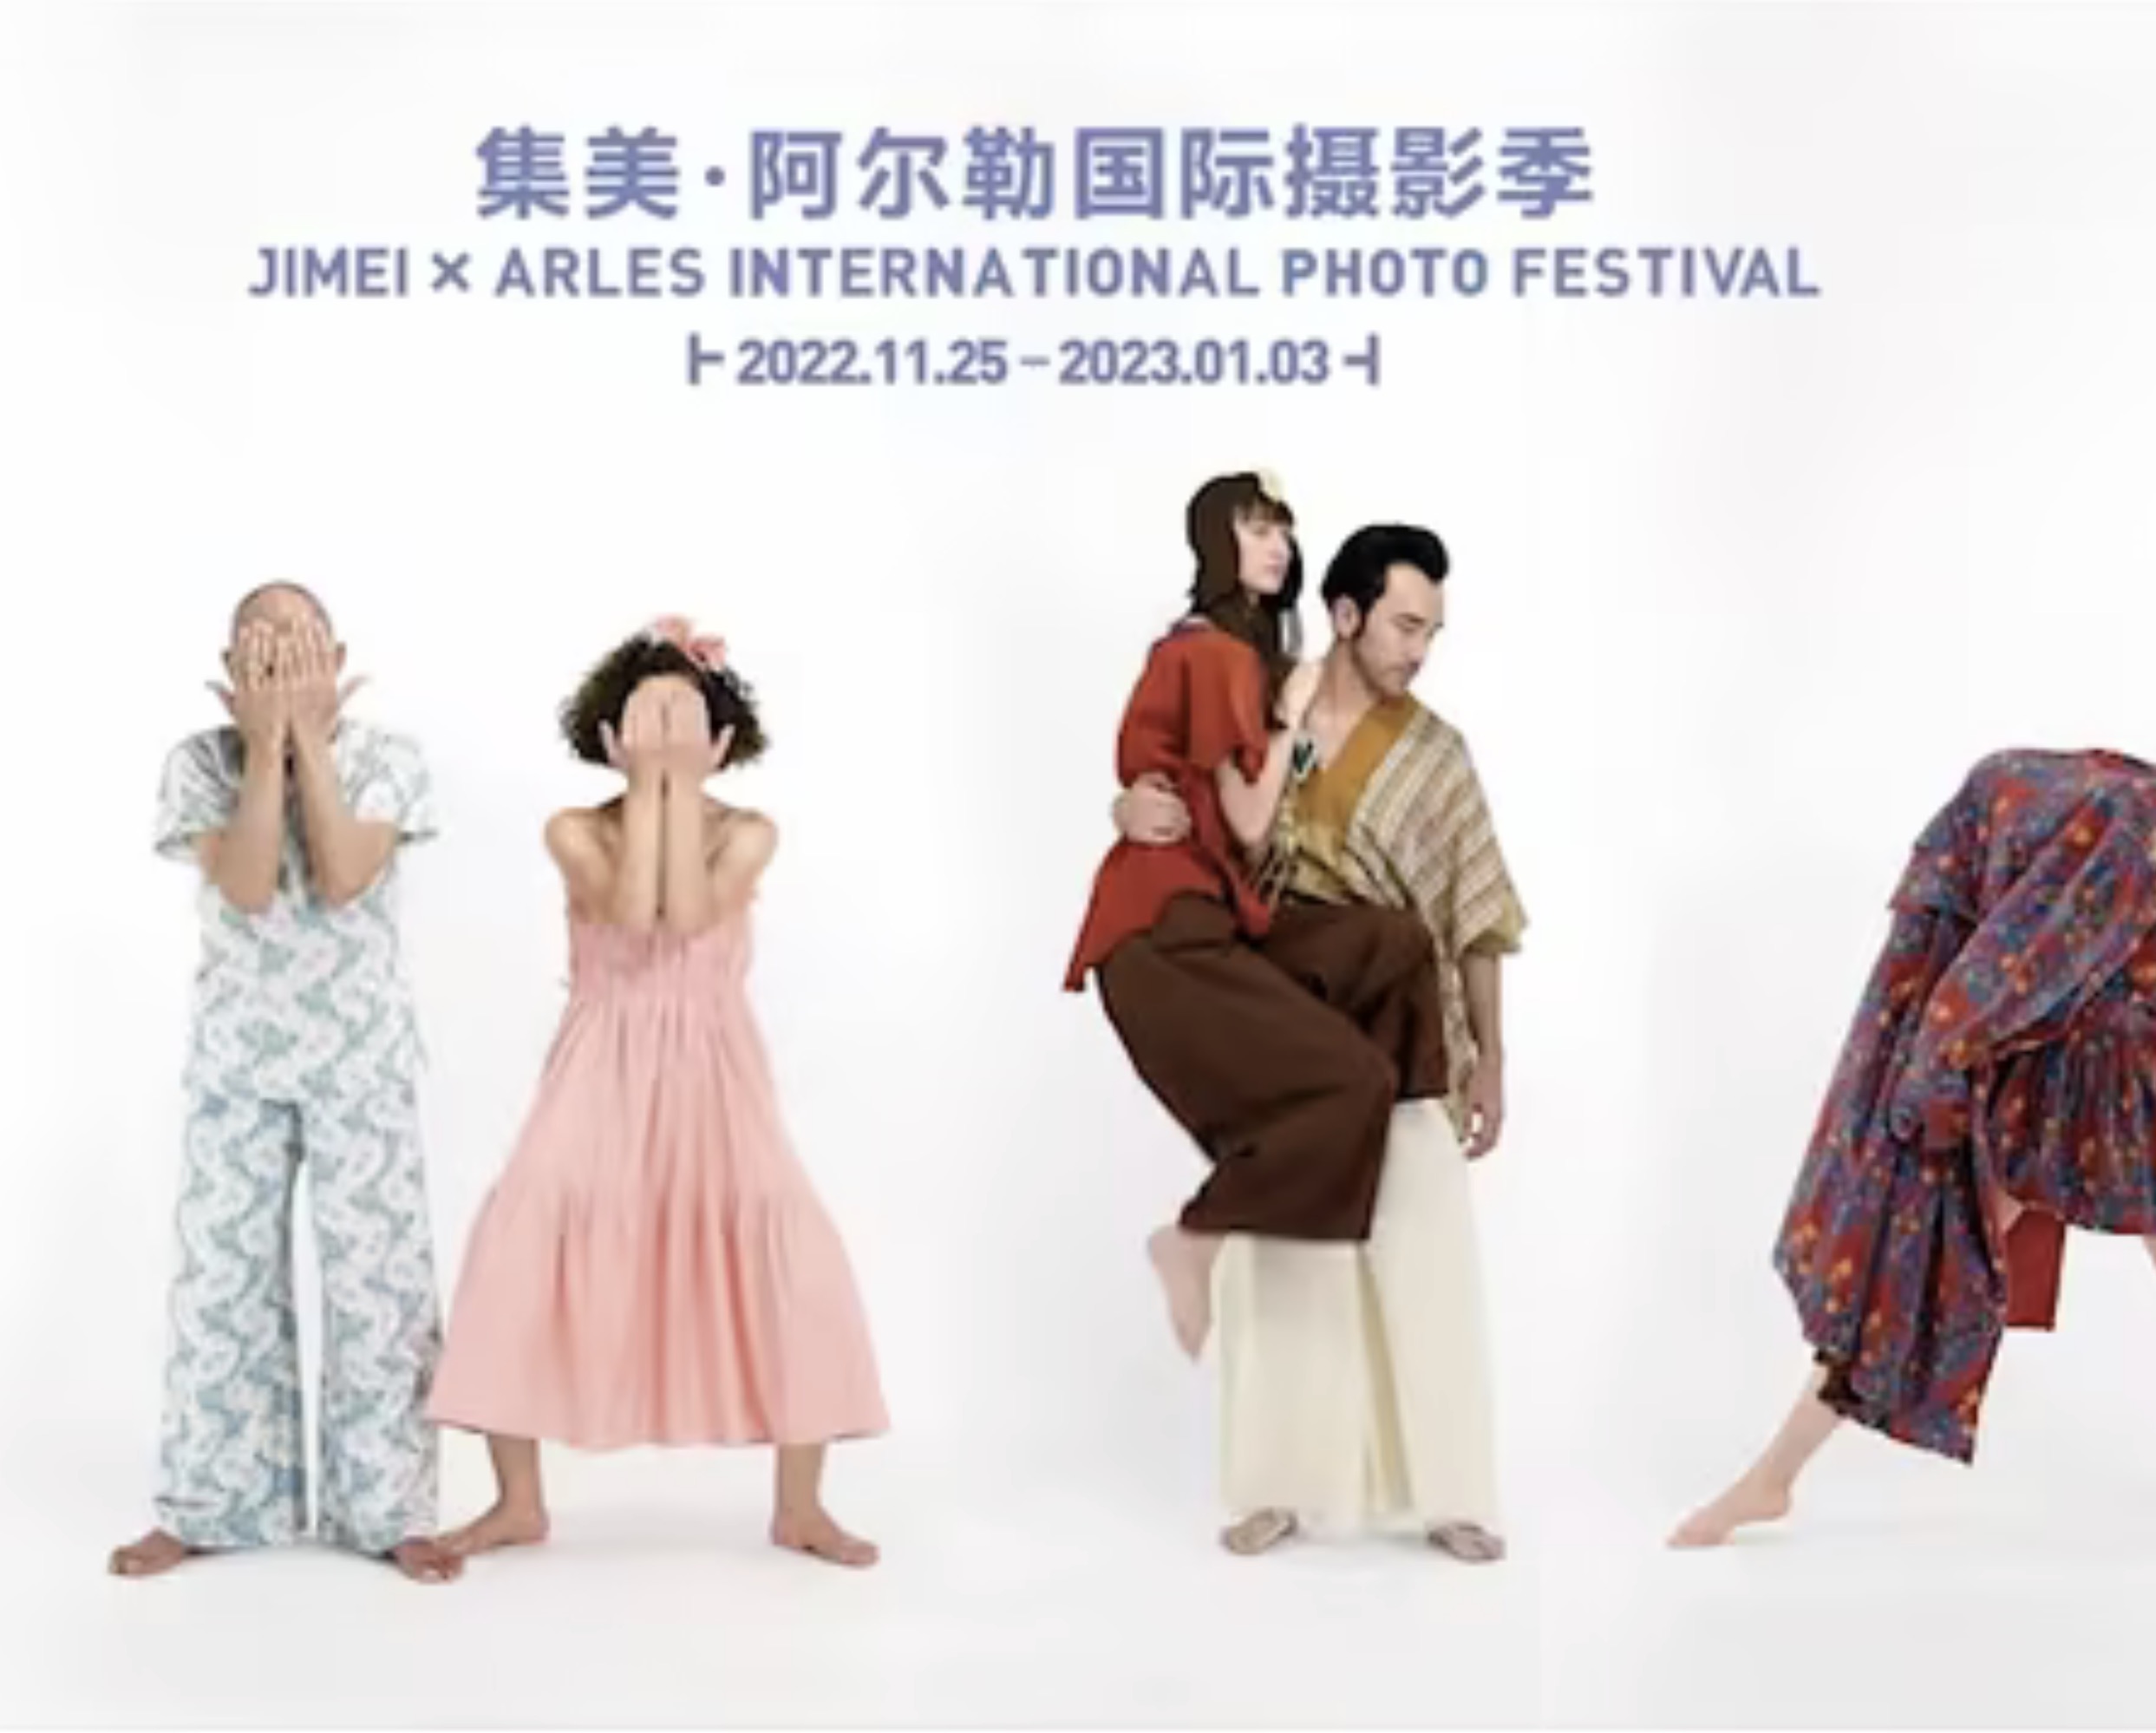 Jimei x ArIes International Photo Festival 2022